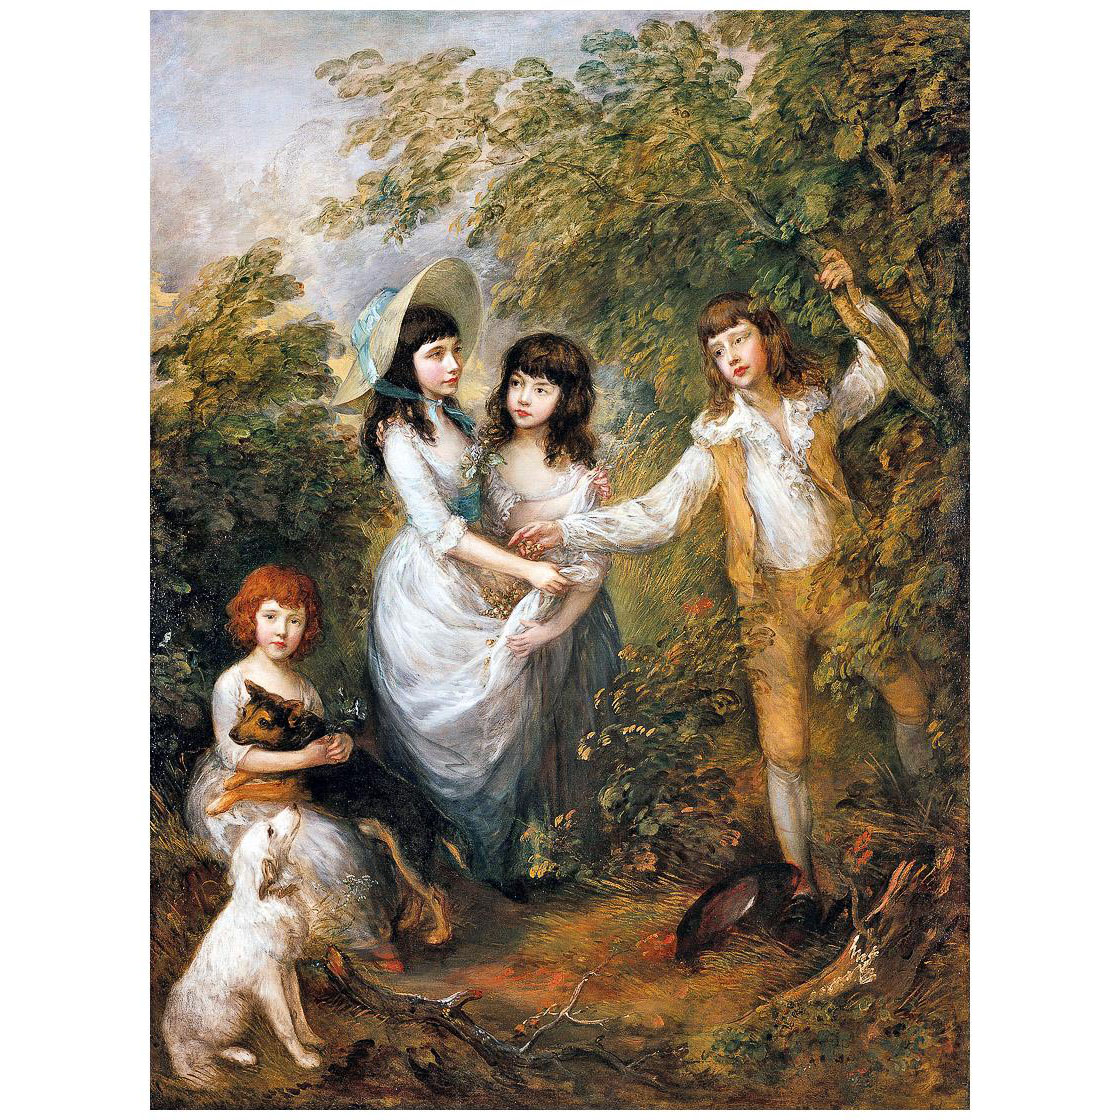 Thomas Gainsborough. The Marsham Children. 1787. Gemaldegalerie Berlin